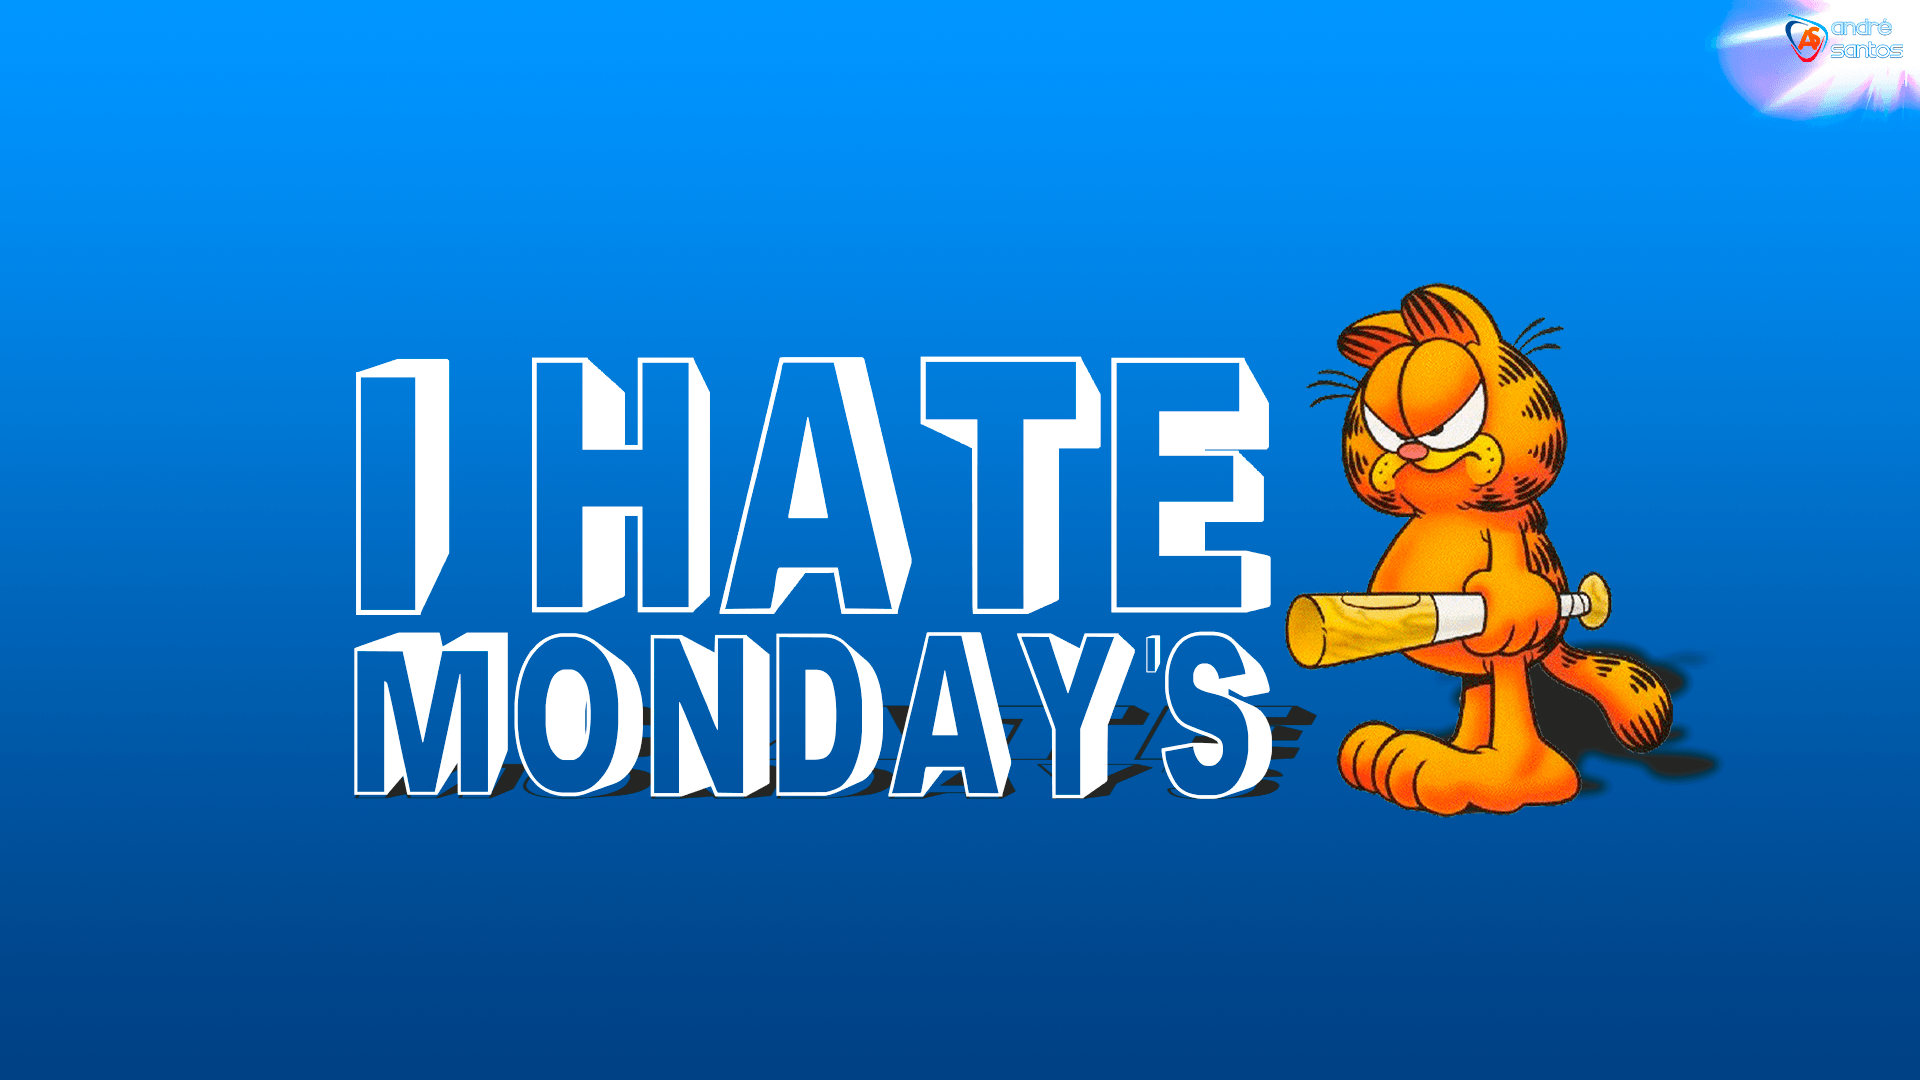 I Hate Monday's! [FULL HD]